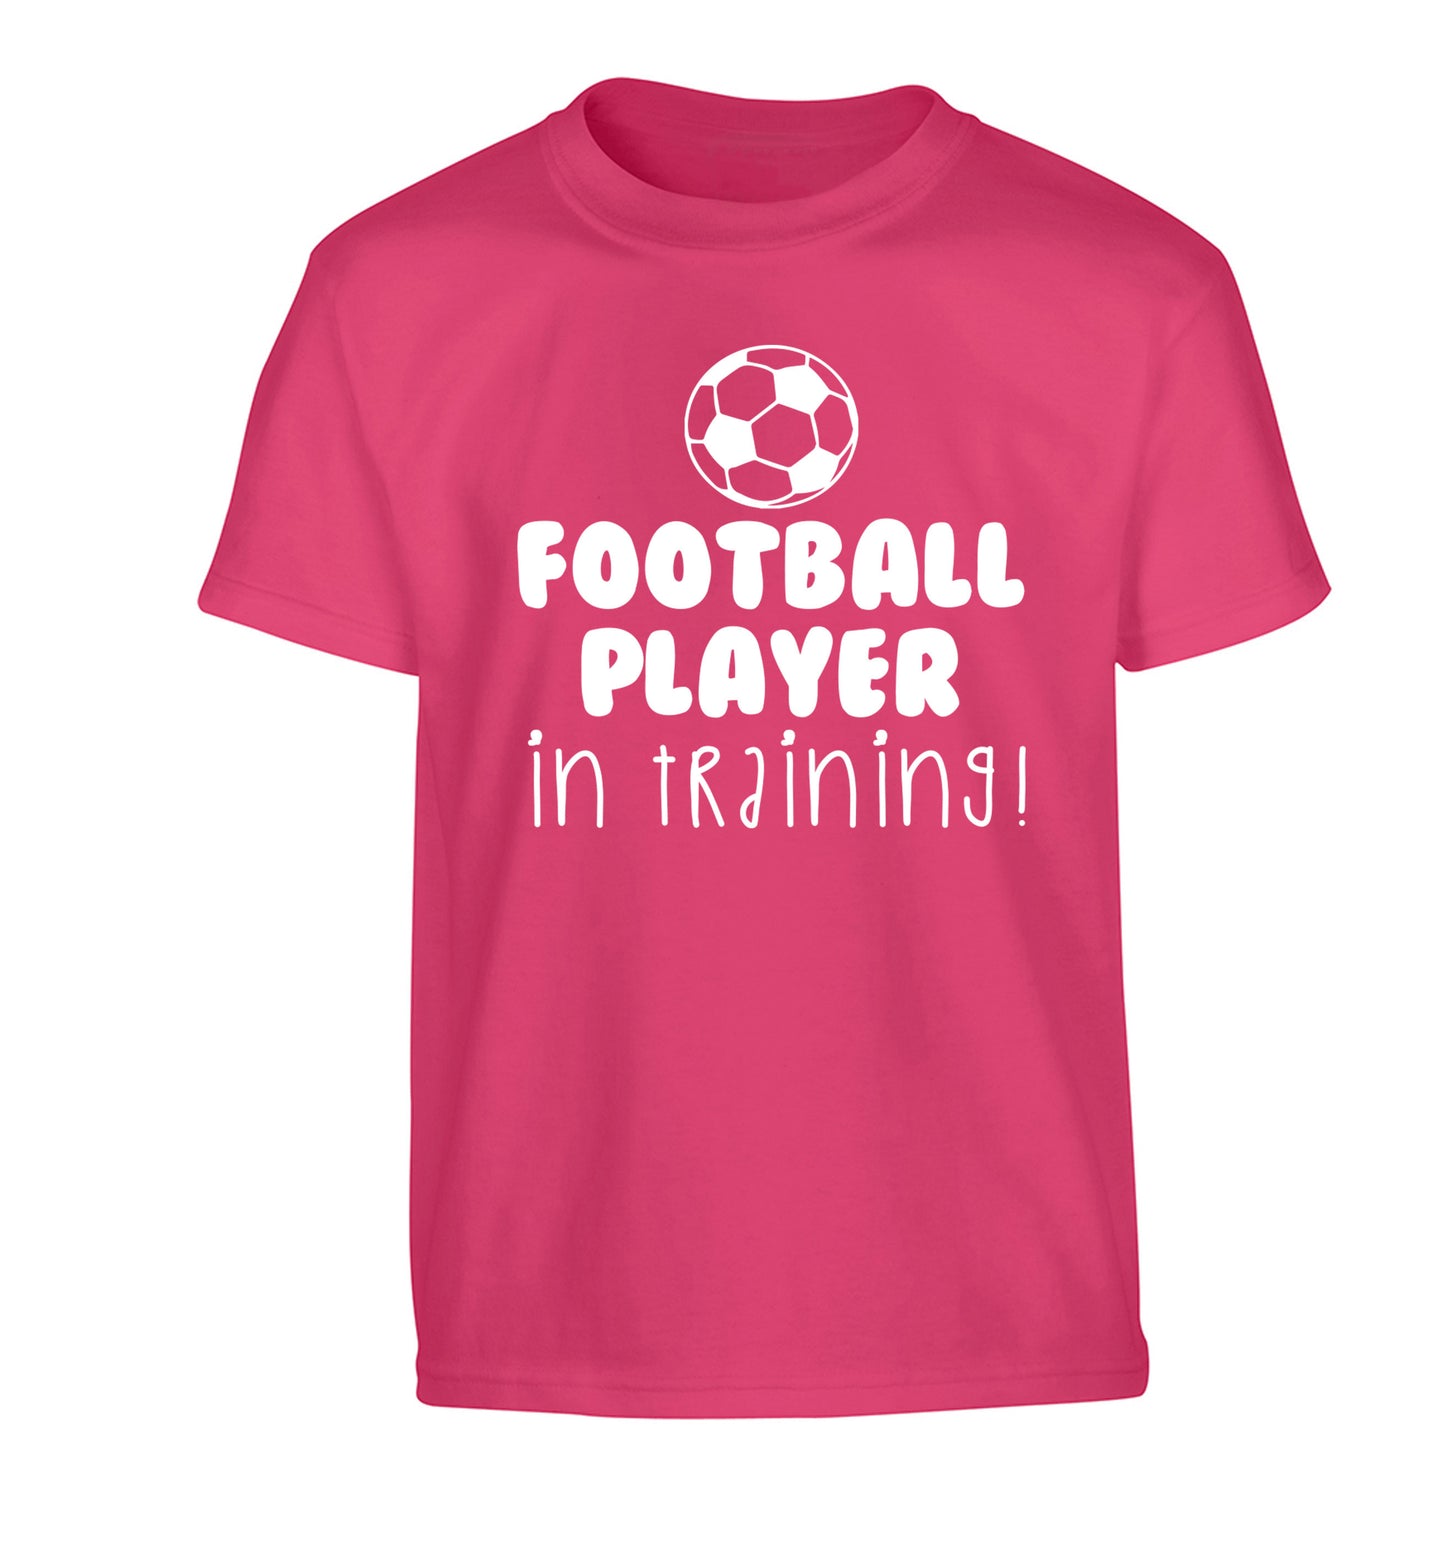 Football player in training Children's pink Tshirt 12-14 Years